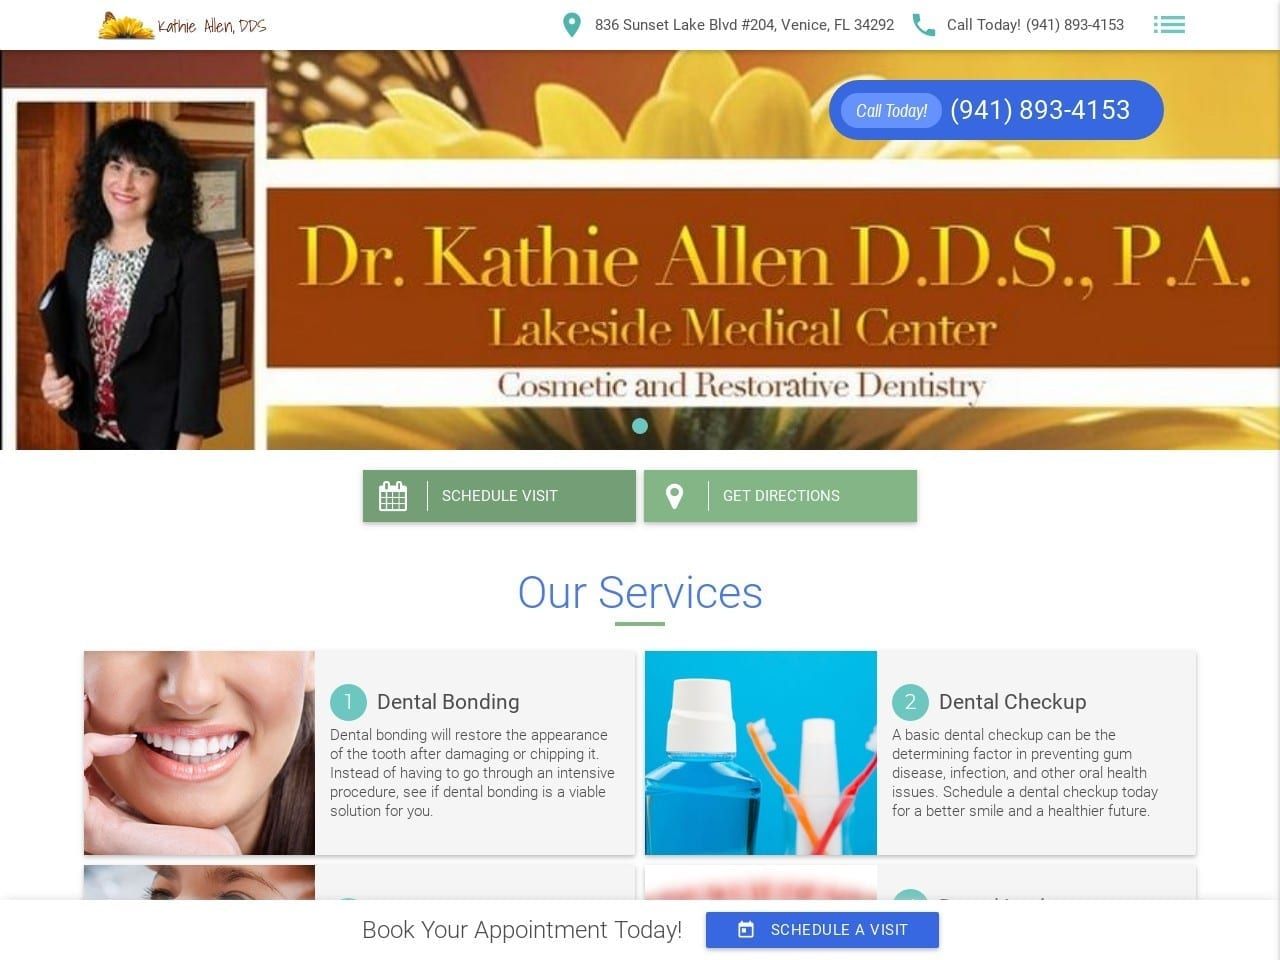 Kathie Allen D.D.S. P.A. Website Screenshot from drkathie.net